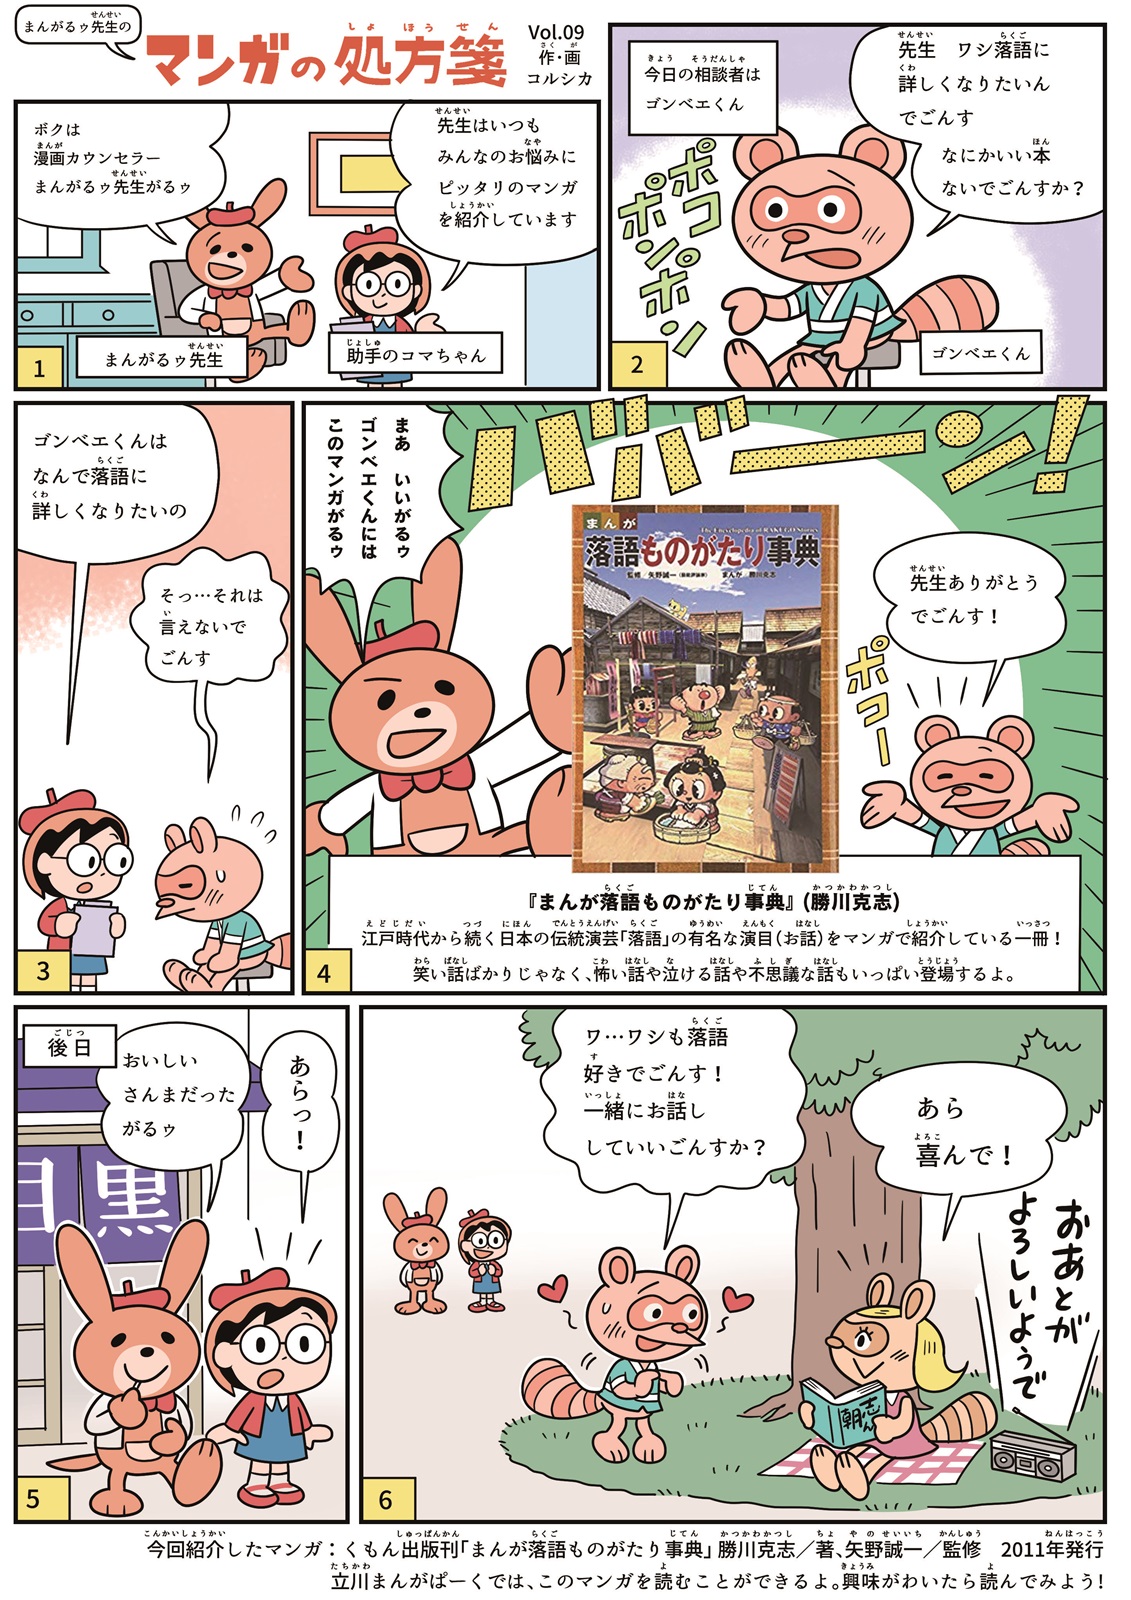 https://mangapark.jp/topics/2019/06/30/images/mangaroosensei_vol09.jpg